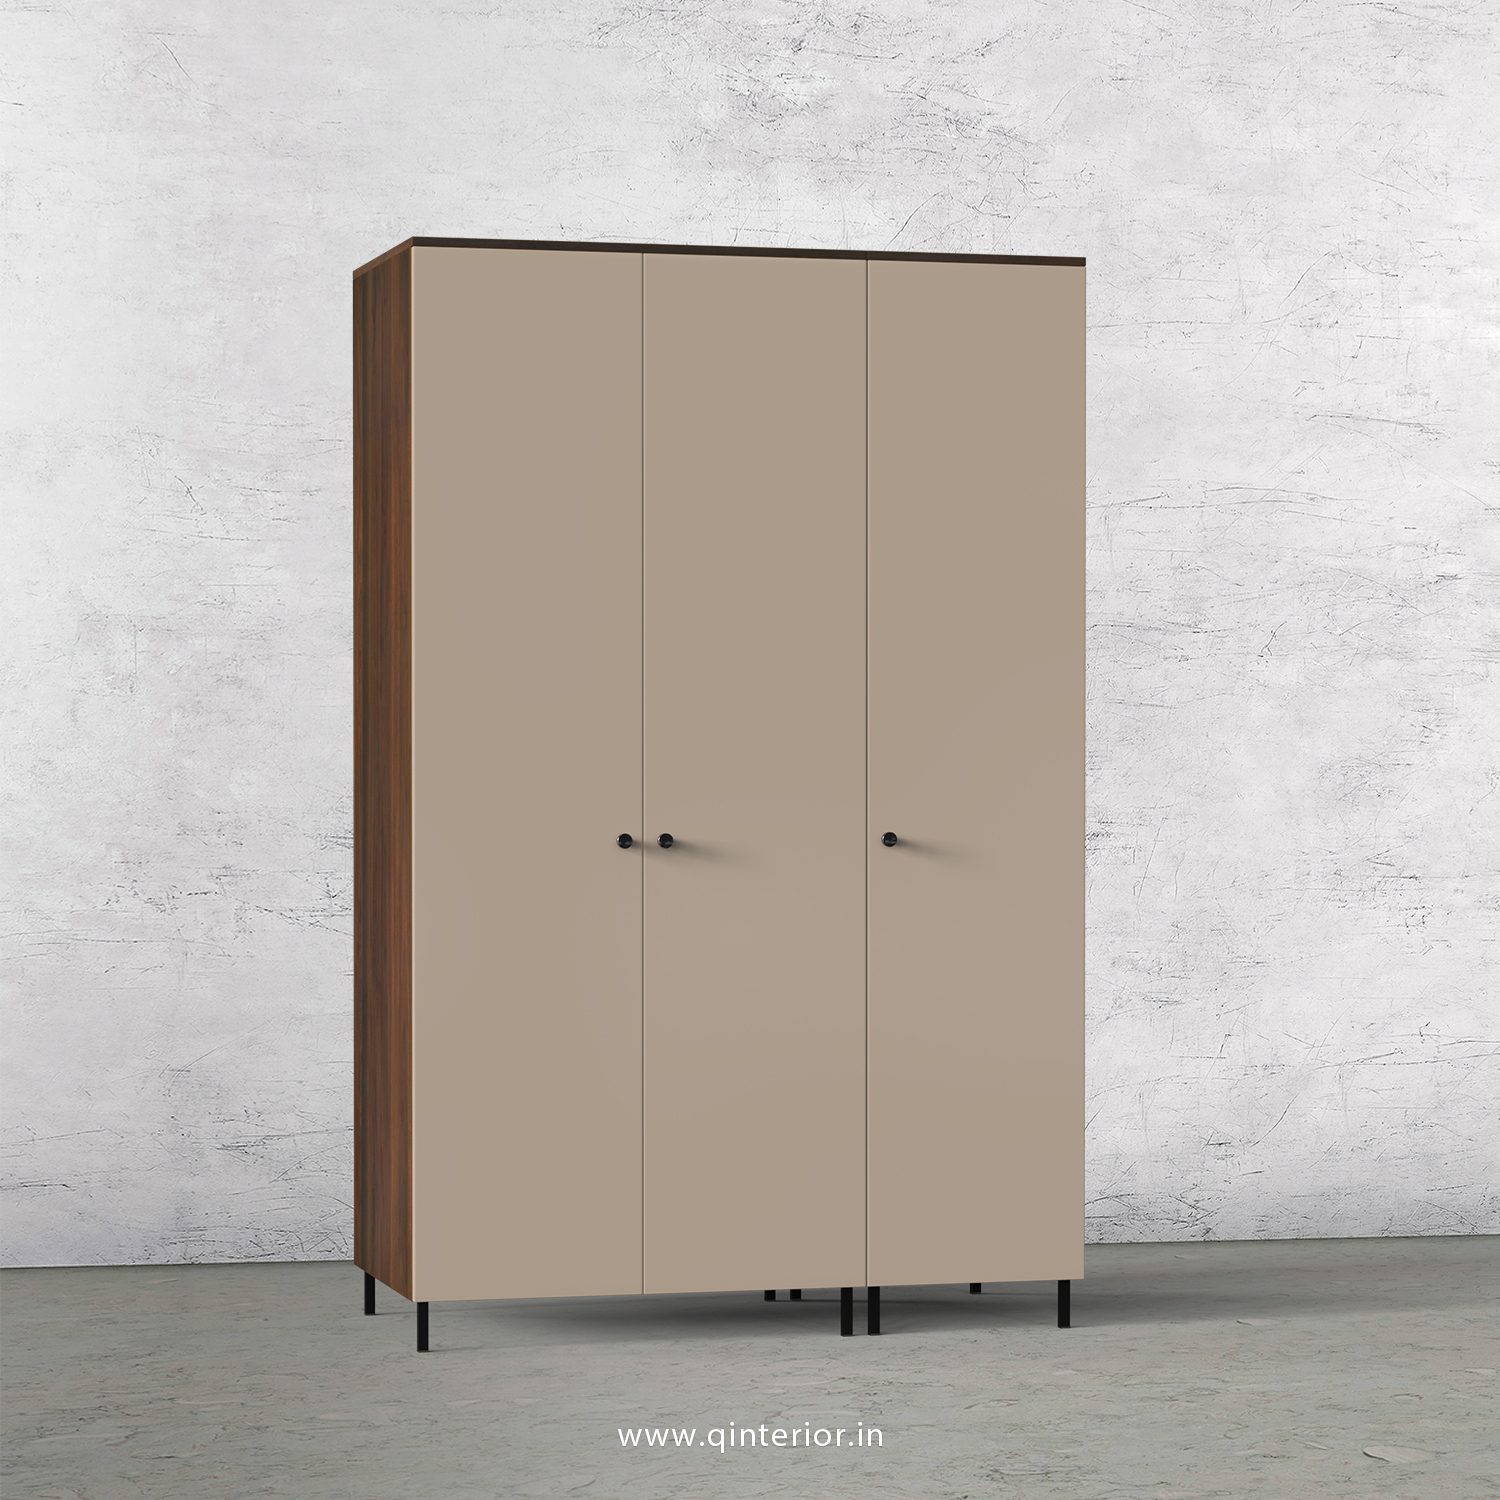 Lambent 3 Door Wardrobe in Walnut and Cappuccino Finish – TWRD001 C13